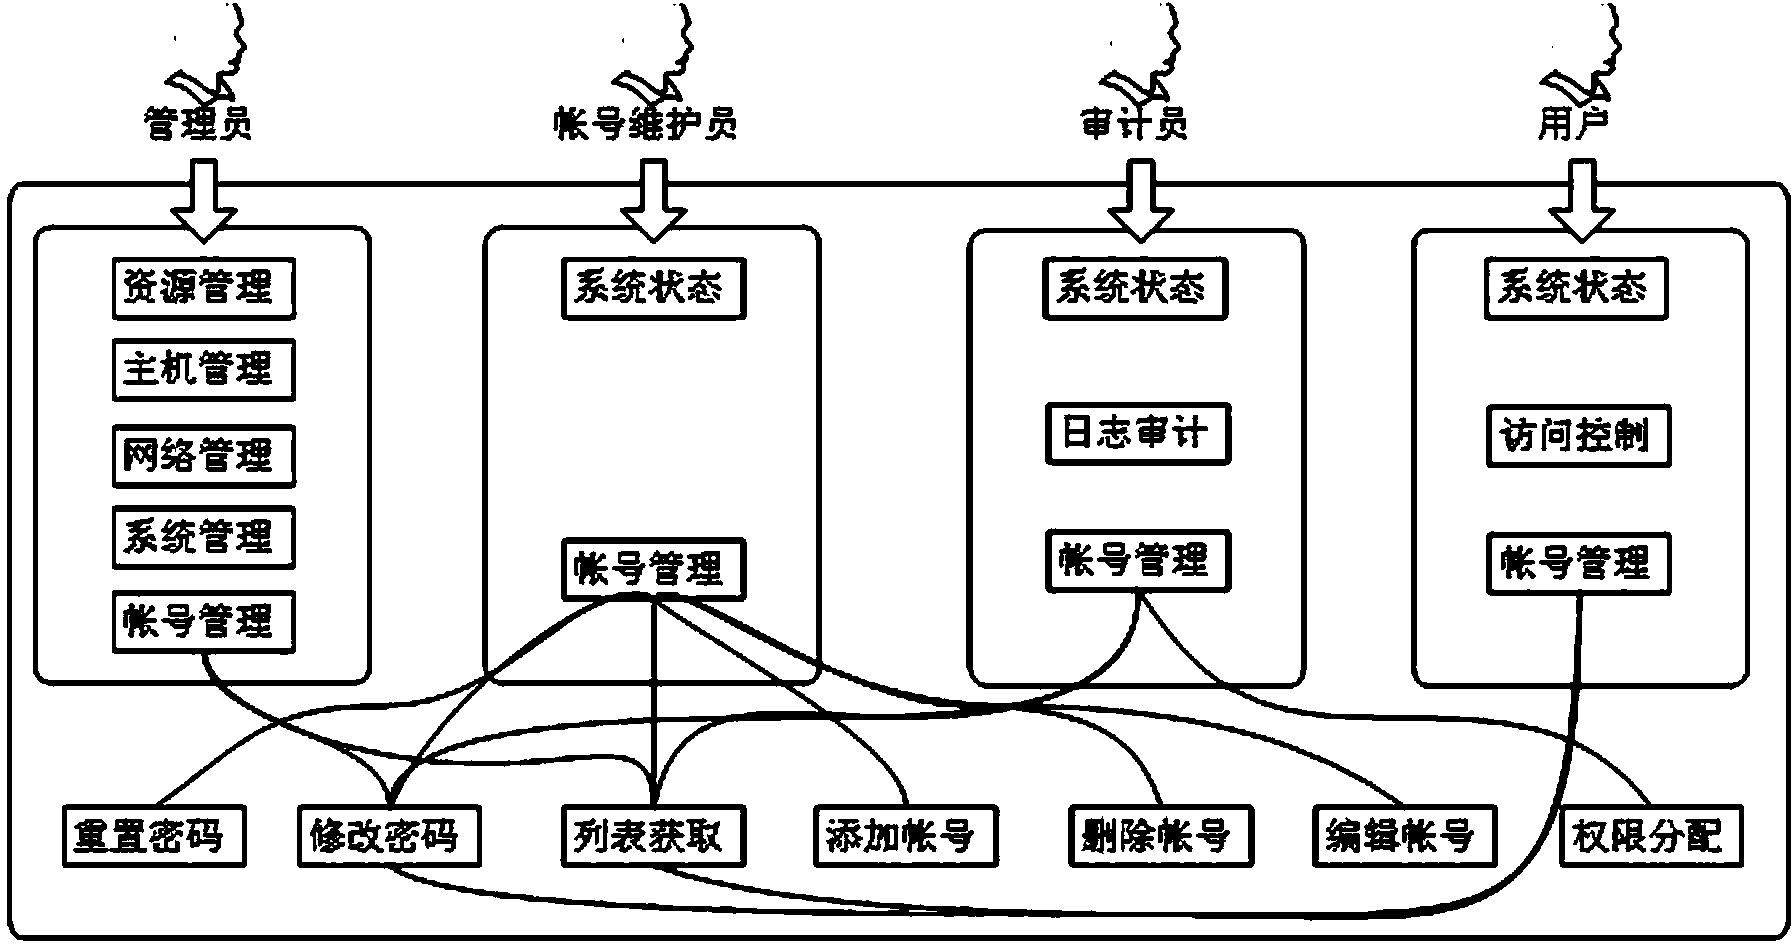 Multi-permission distribution method based on SAN storage system